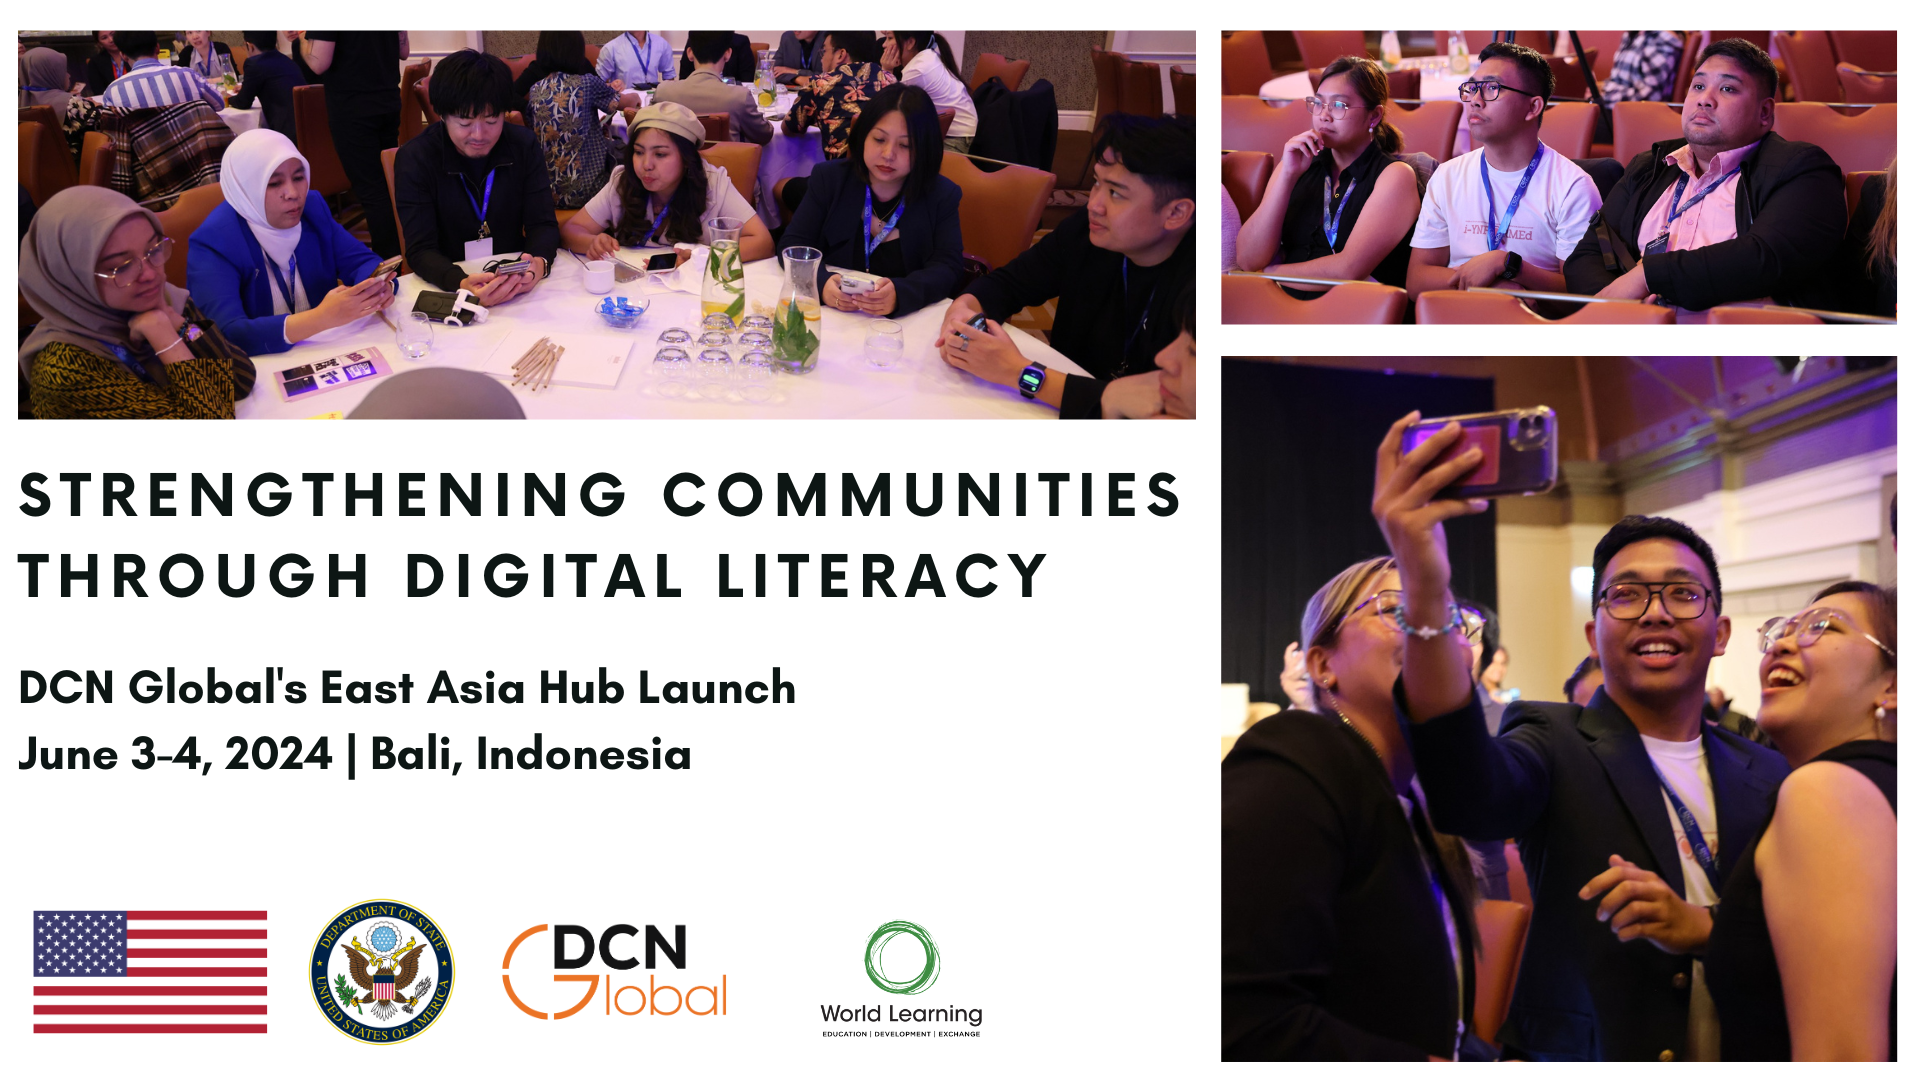 June 3-4, 2024 | Strengthening Communities Through Digital Literacy, DCN Global's East Asia Hub Launch